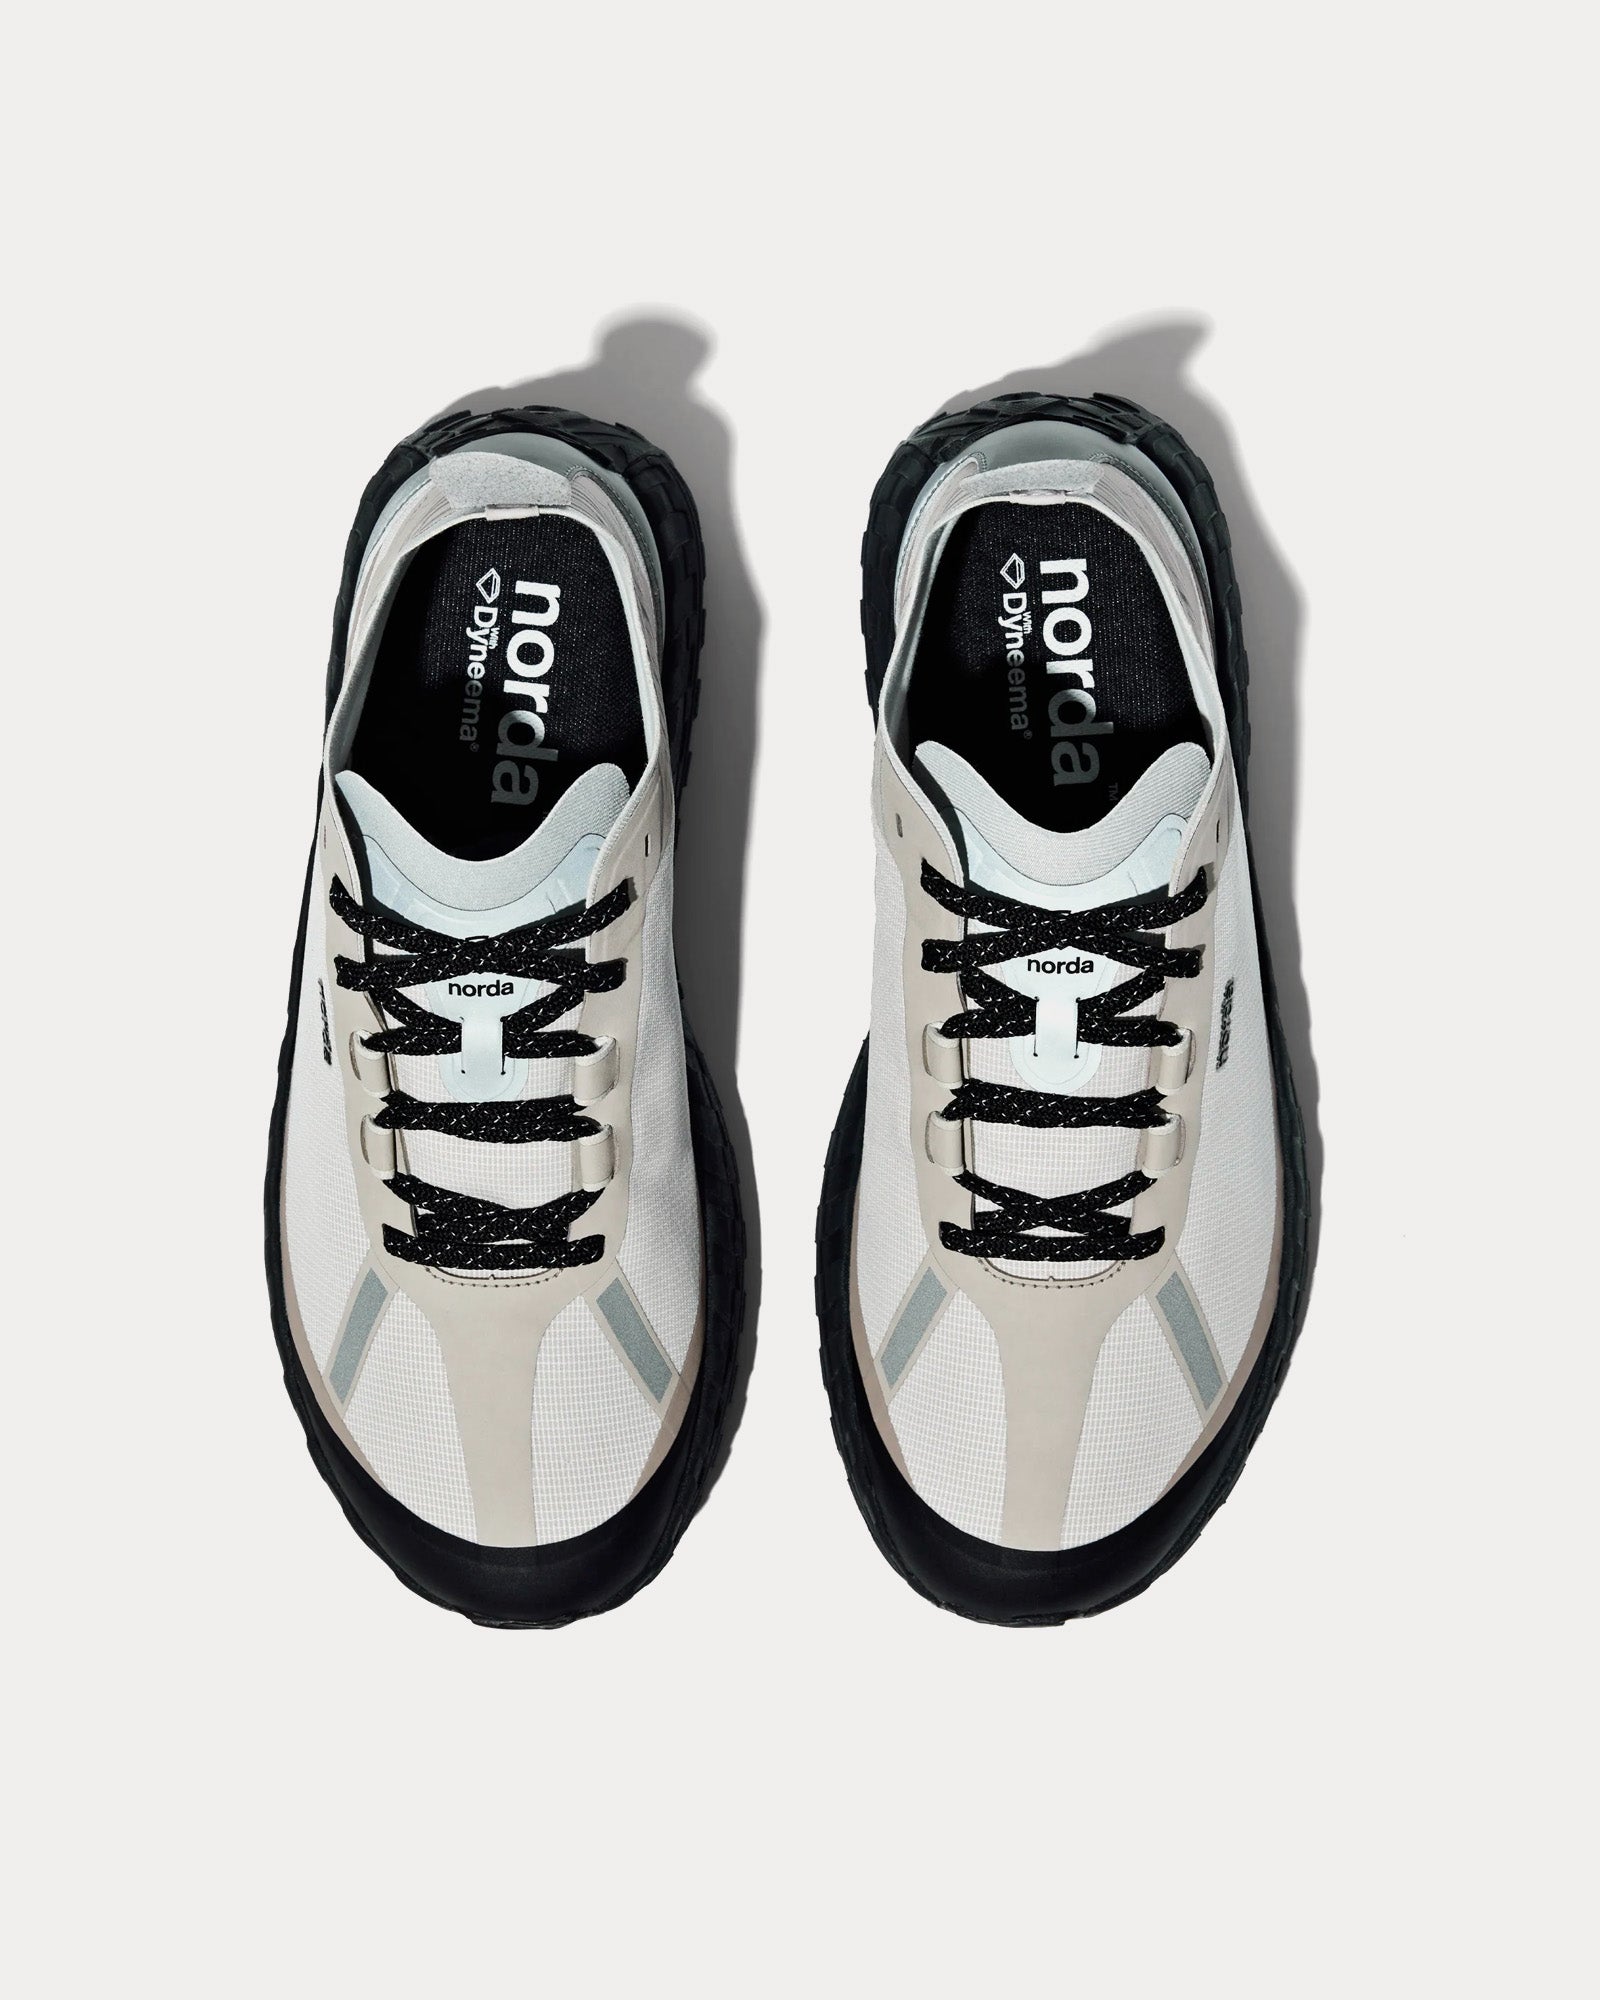 Norda - 001 W Cinder Running Shoes